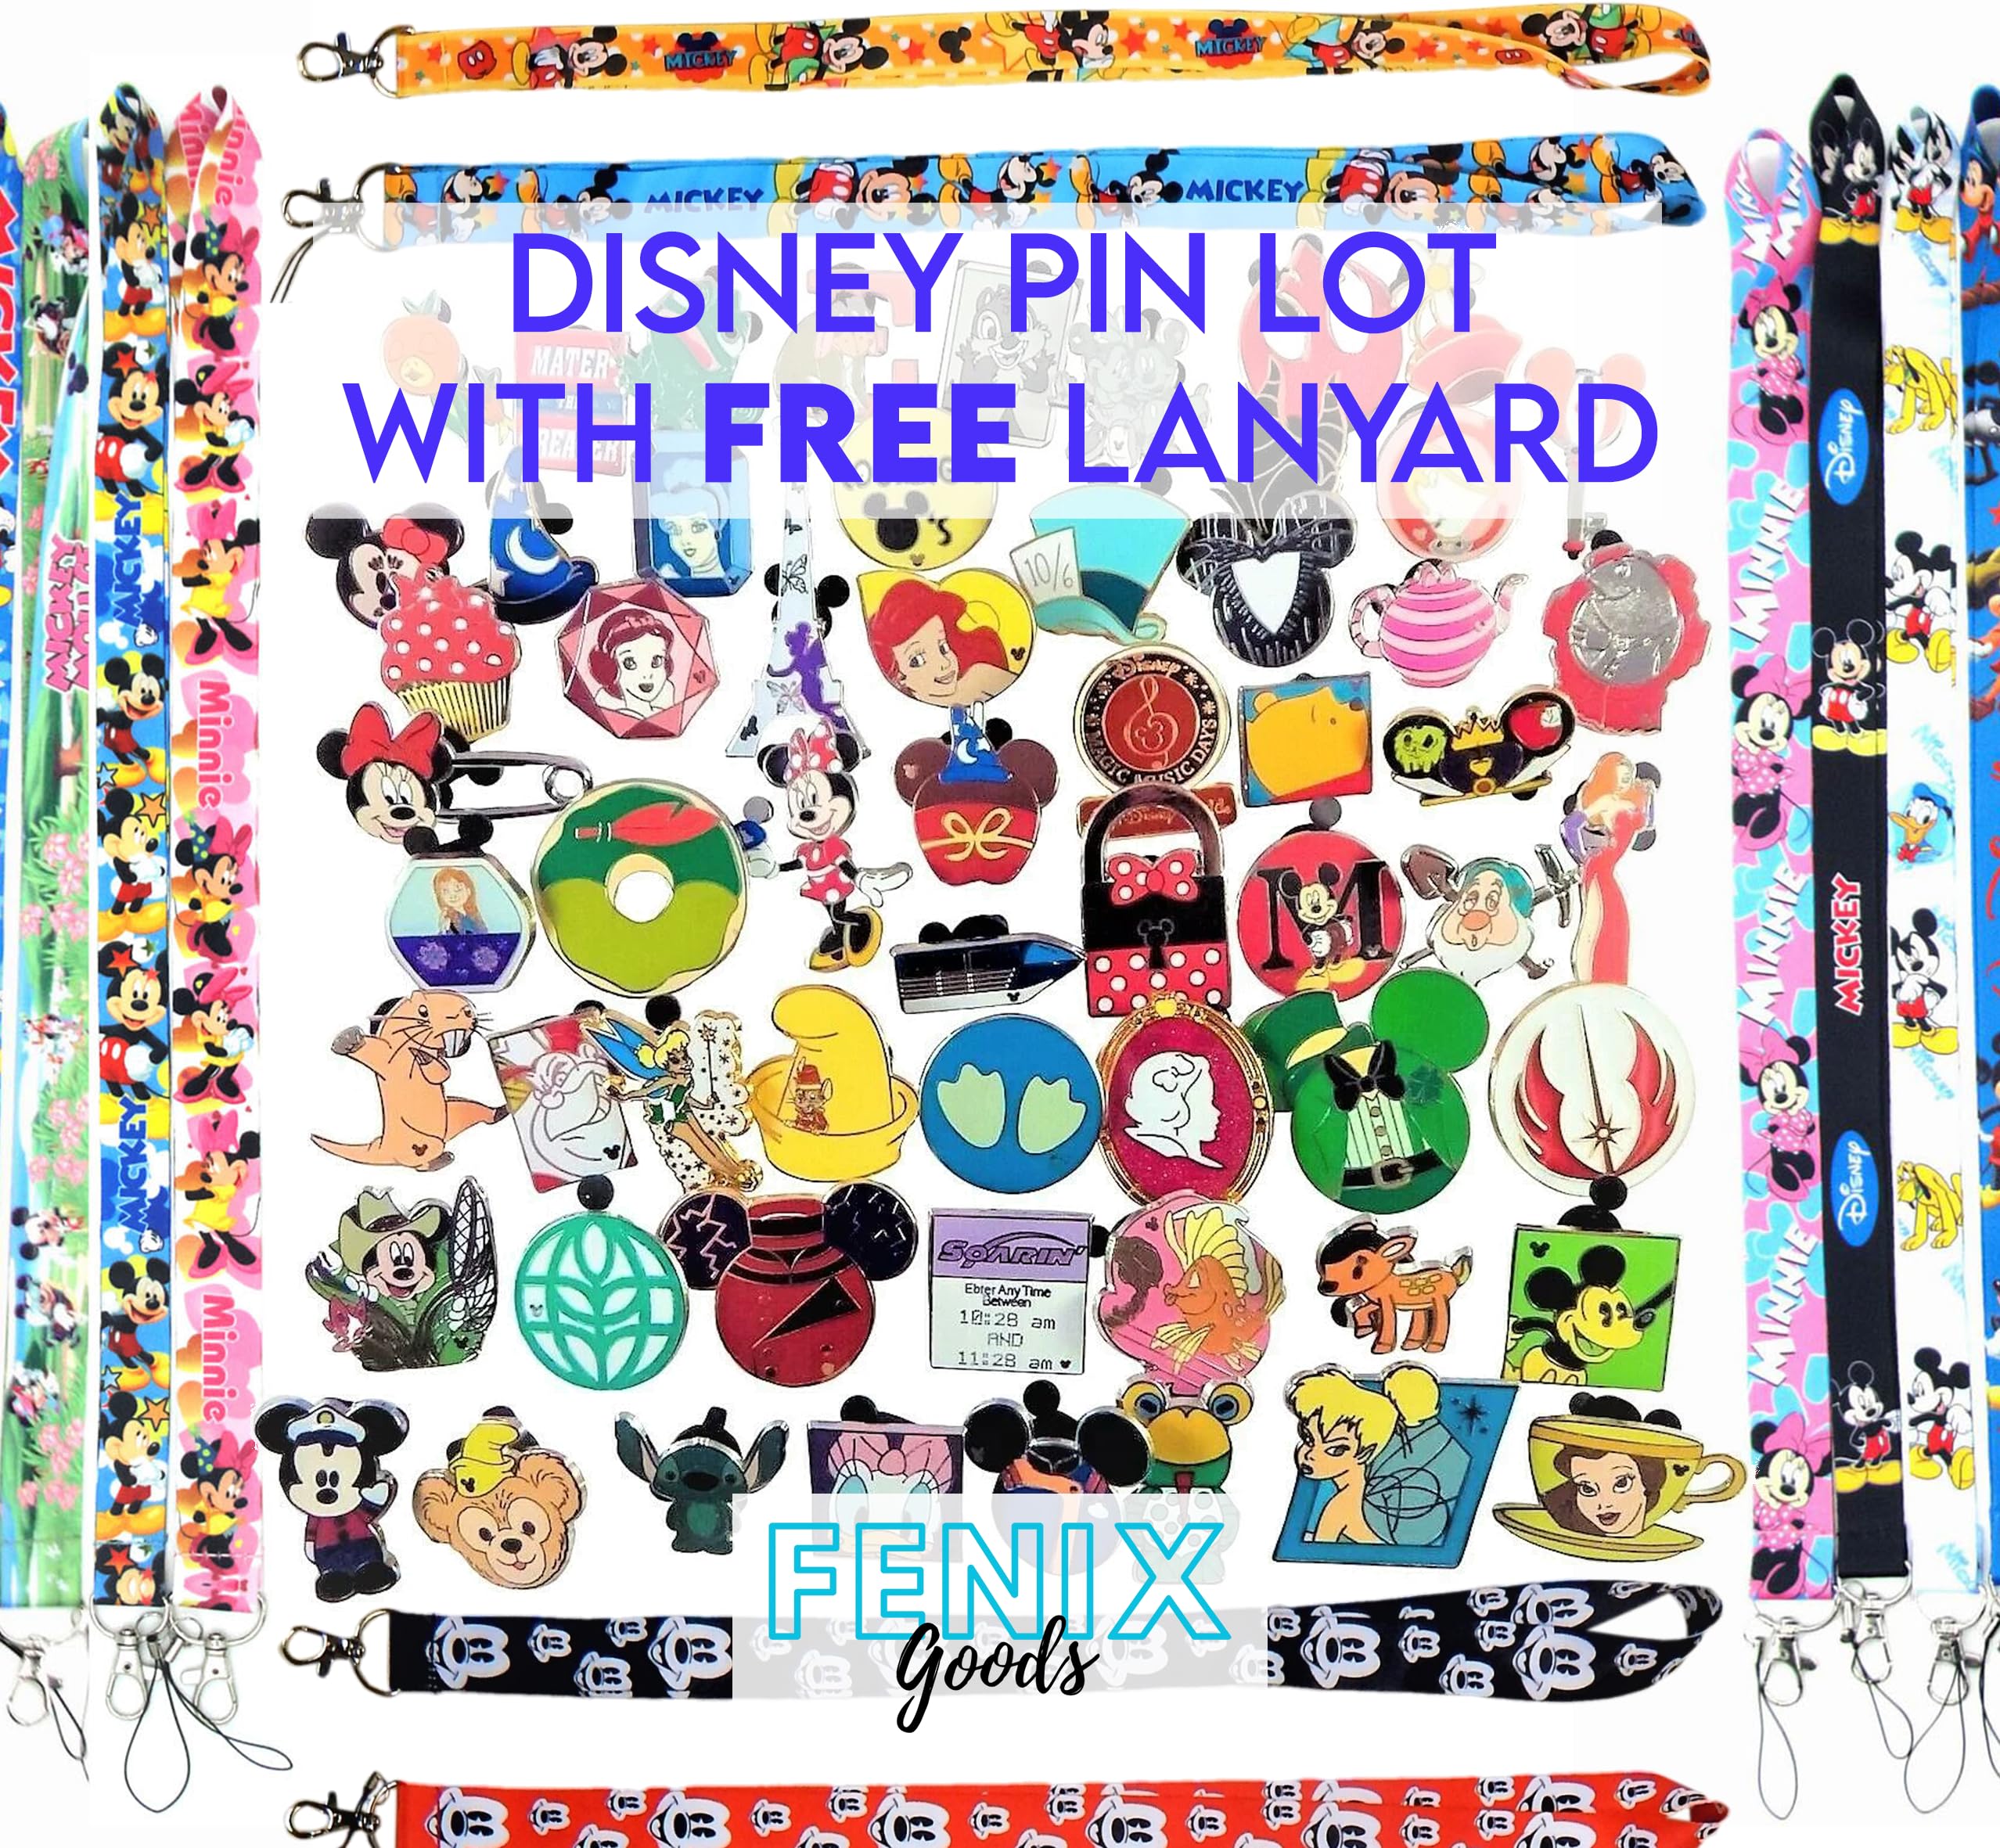 Disney Trading Pin Lot Mixed Pins with Disney Lanyard - Tradable Metal Set Mickey Head Backing - Disney Pins Collector- No Doubles - Assorted Pin Lot